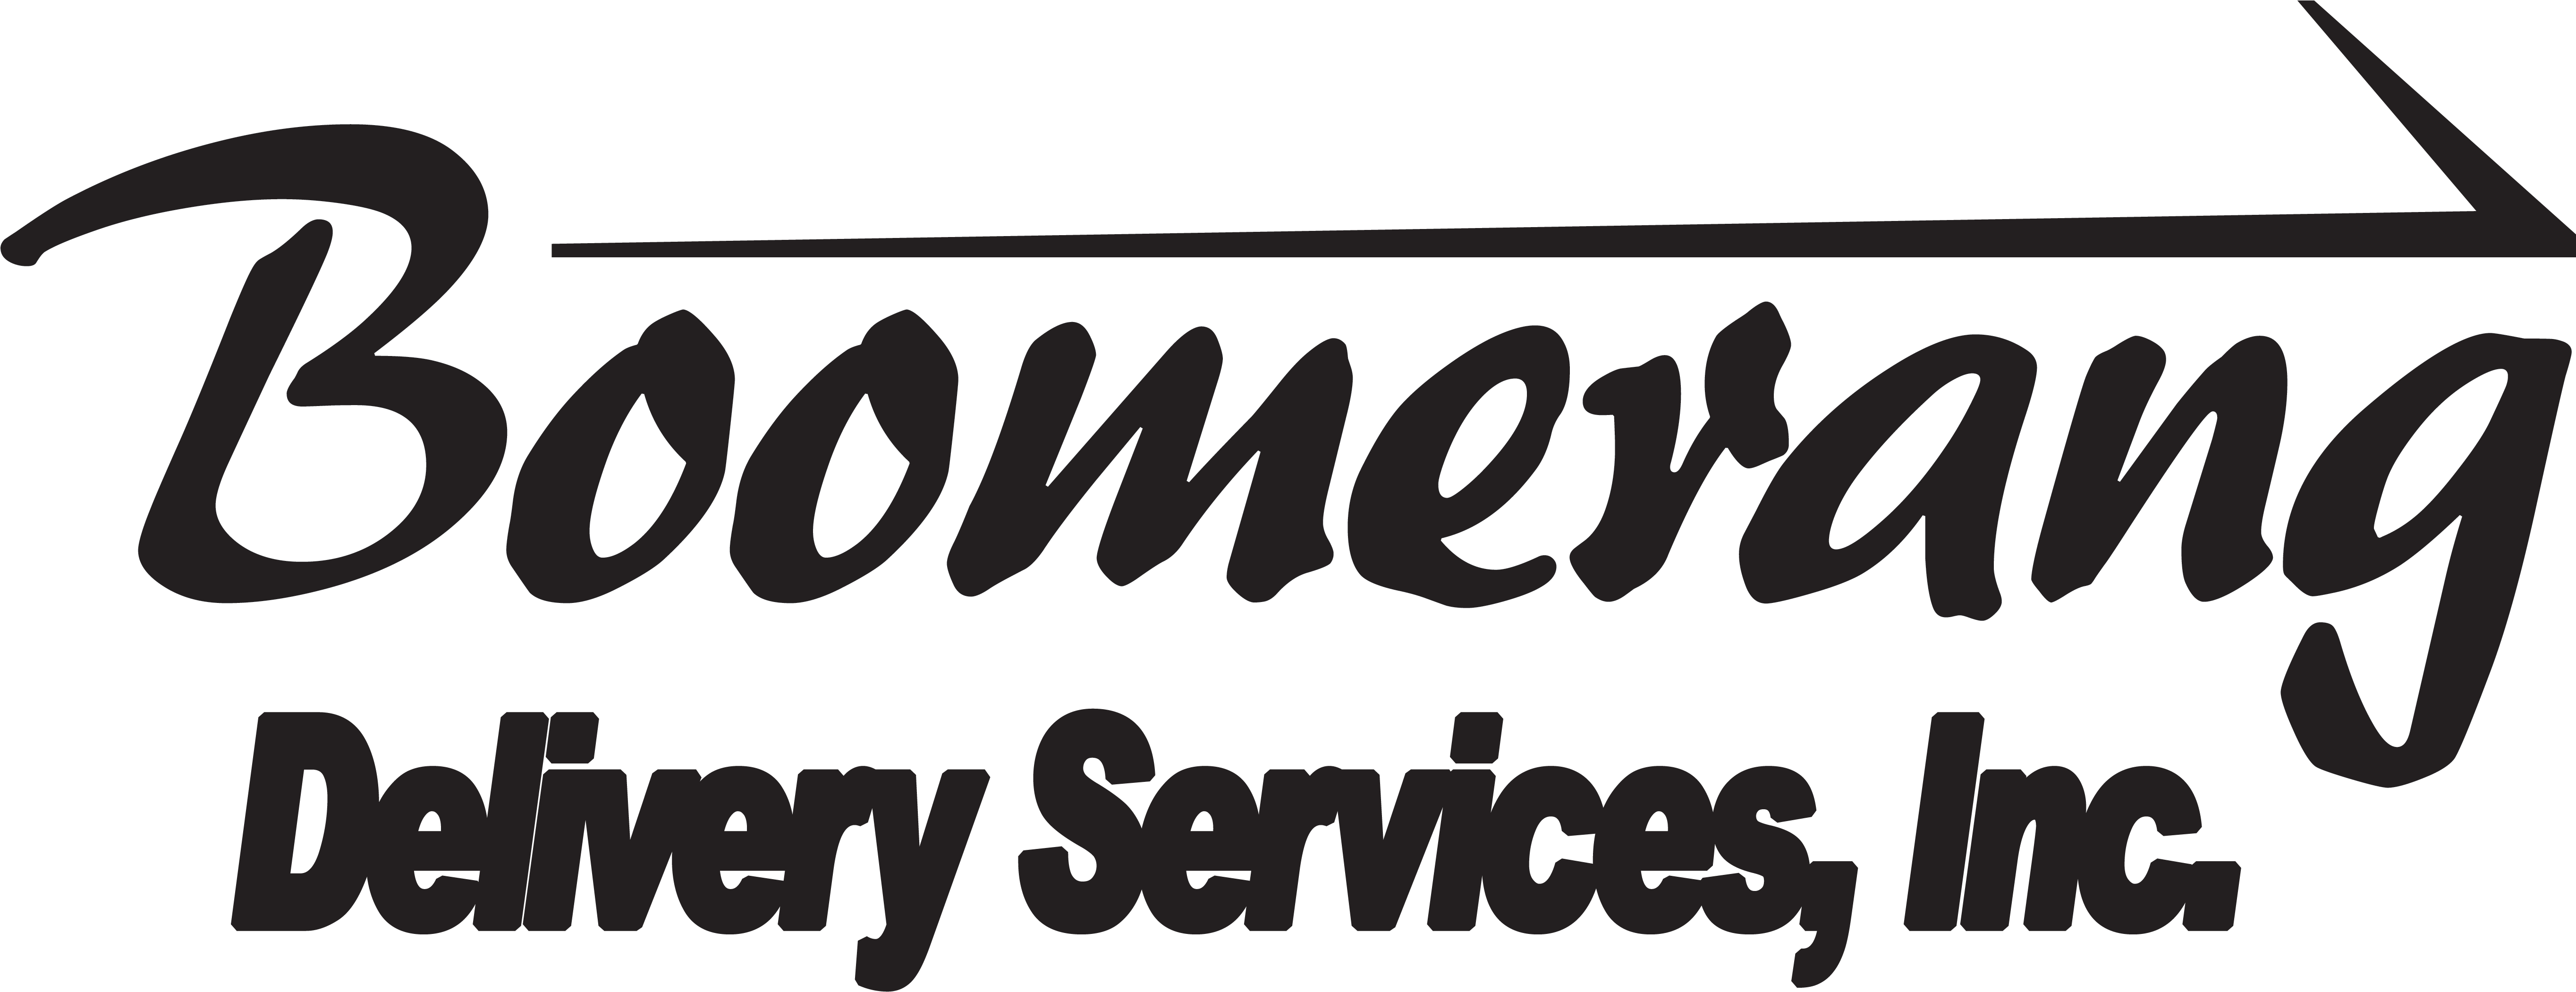 Boomerang Delivery Services Logo